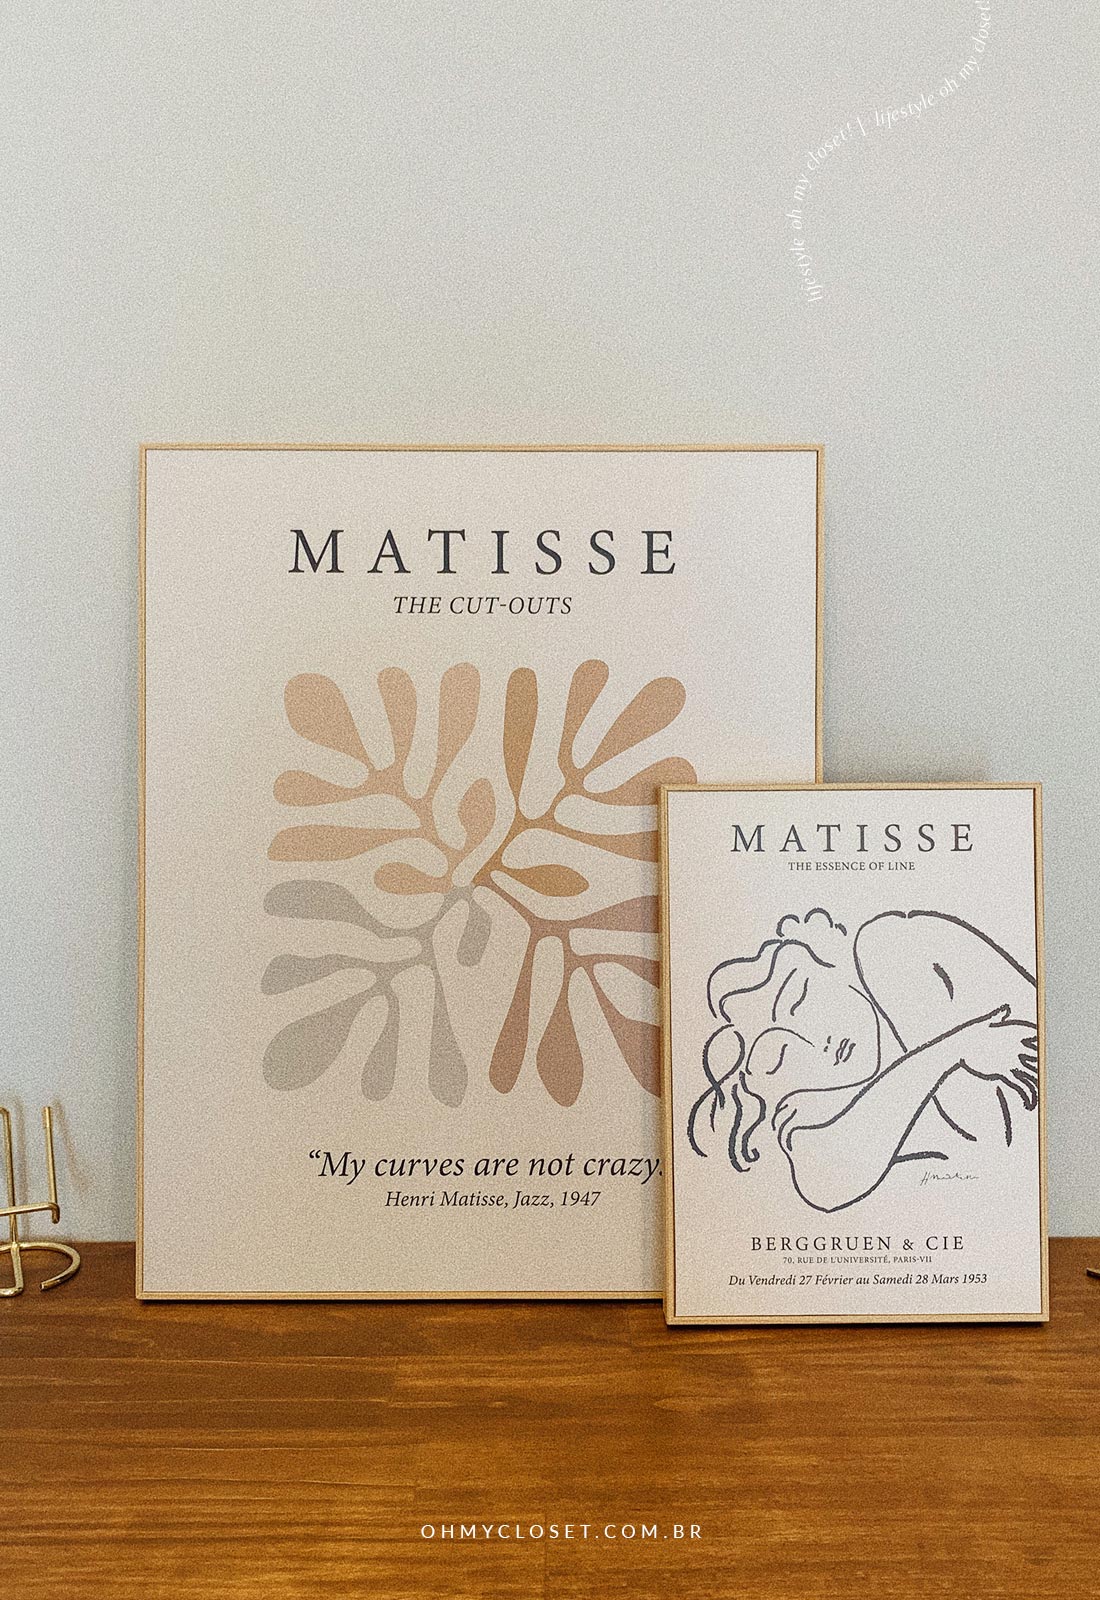 Mais obras de Henri Matisse.